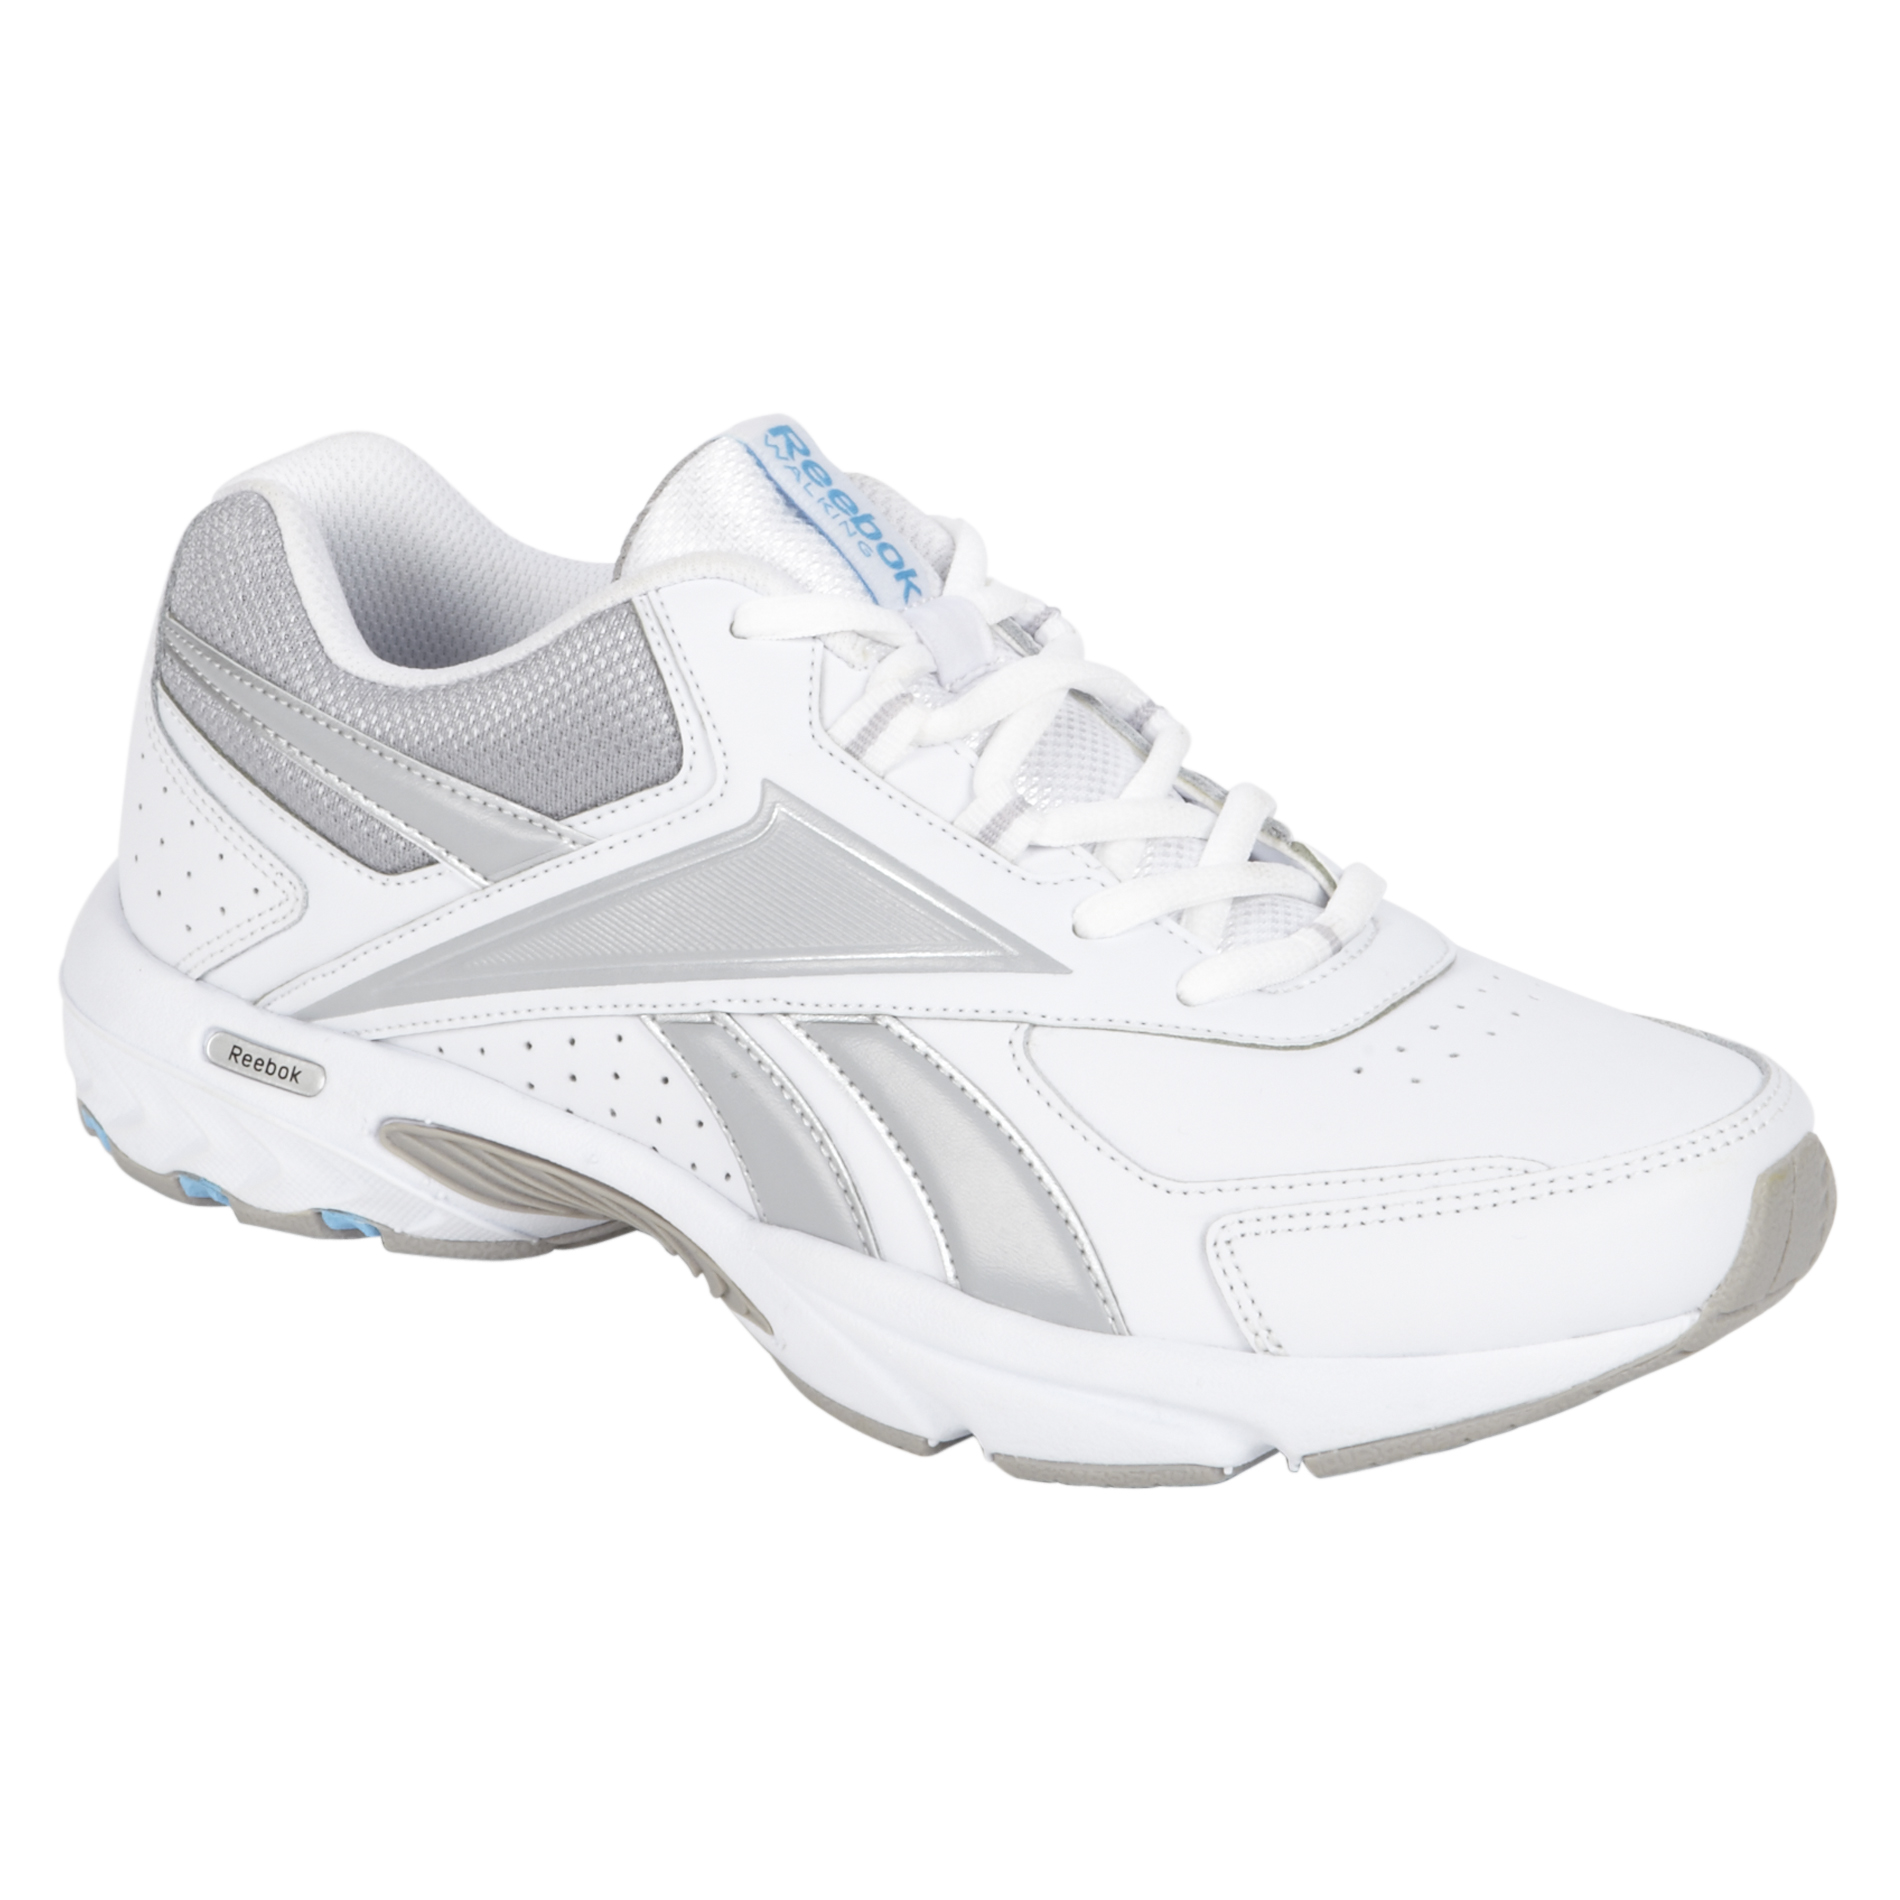 Reebok Women's Daily Cushion Walking Athletic Shoe - White/Grey